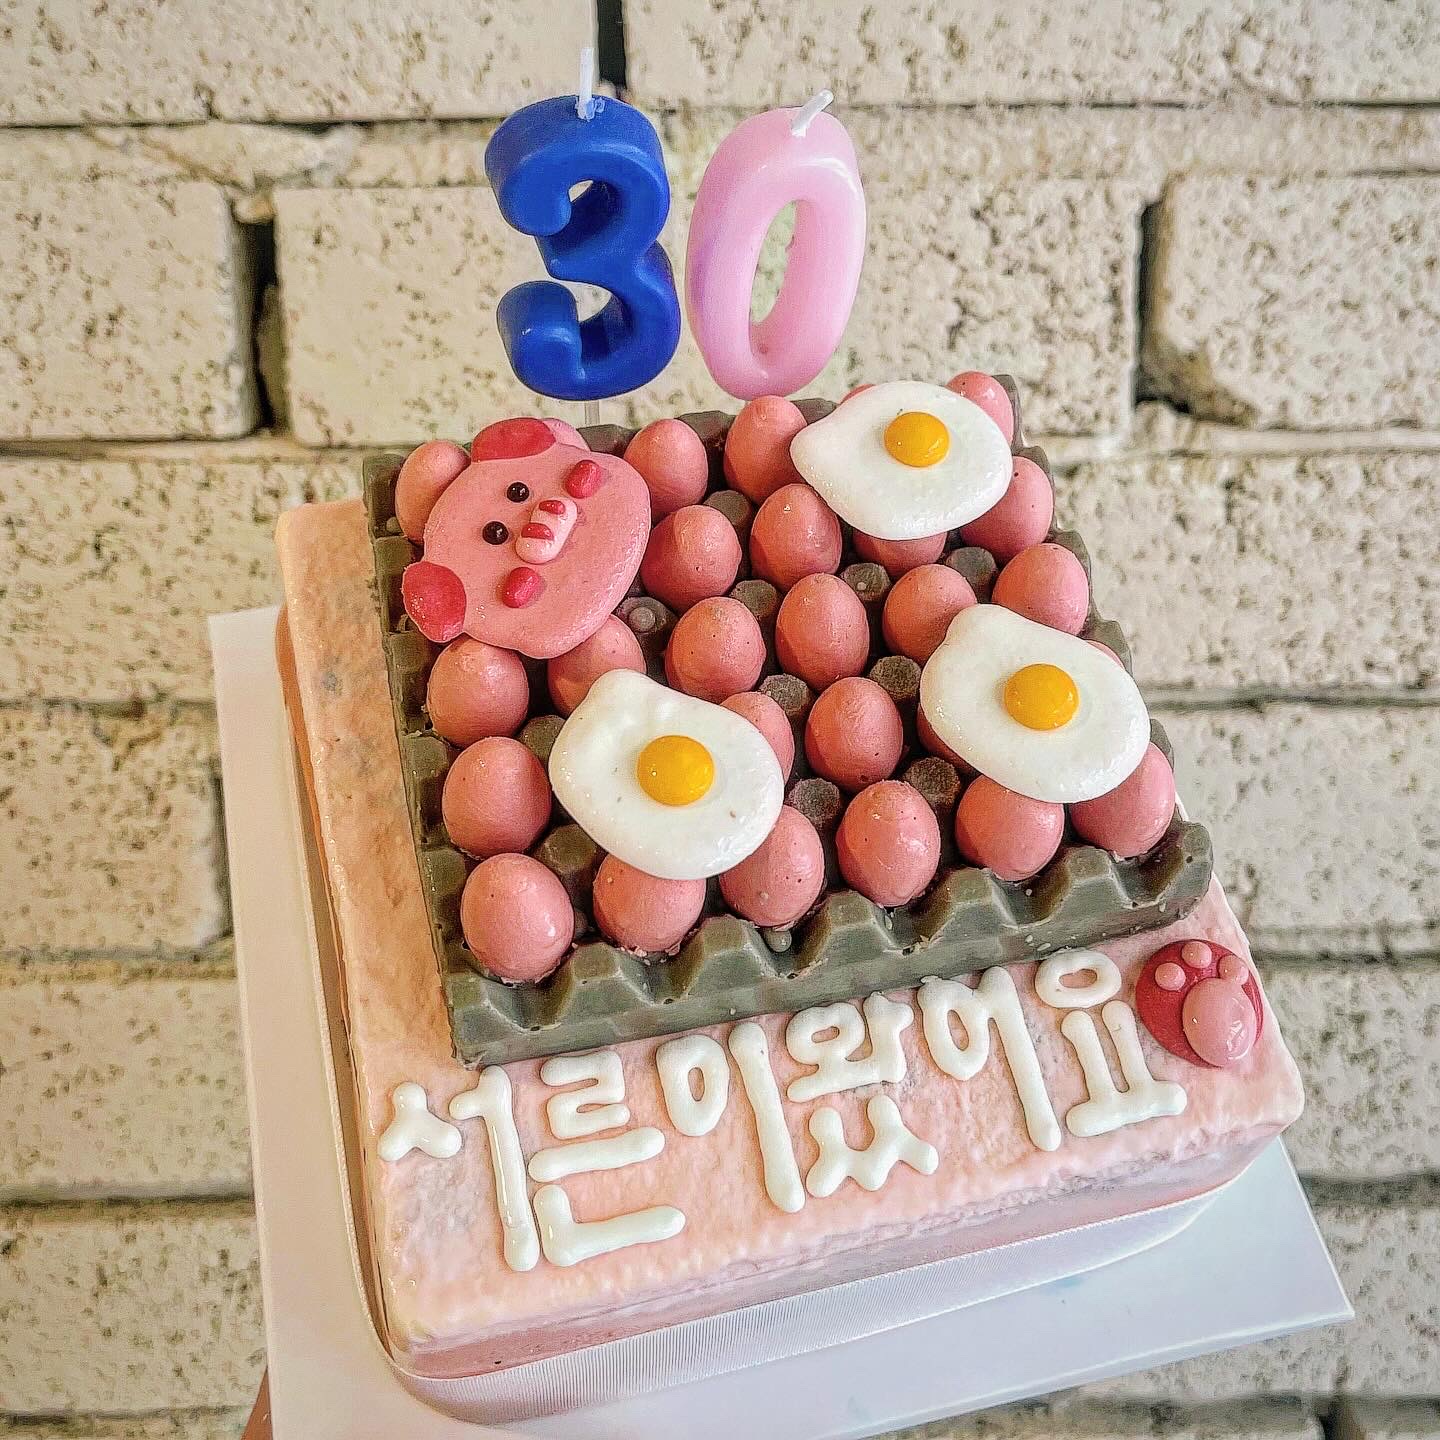 [MINI] 30살 (십이간지) 계란한판 케이크